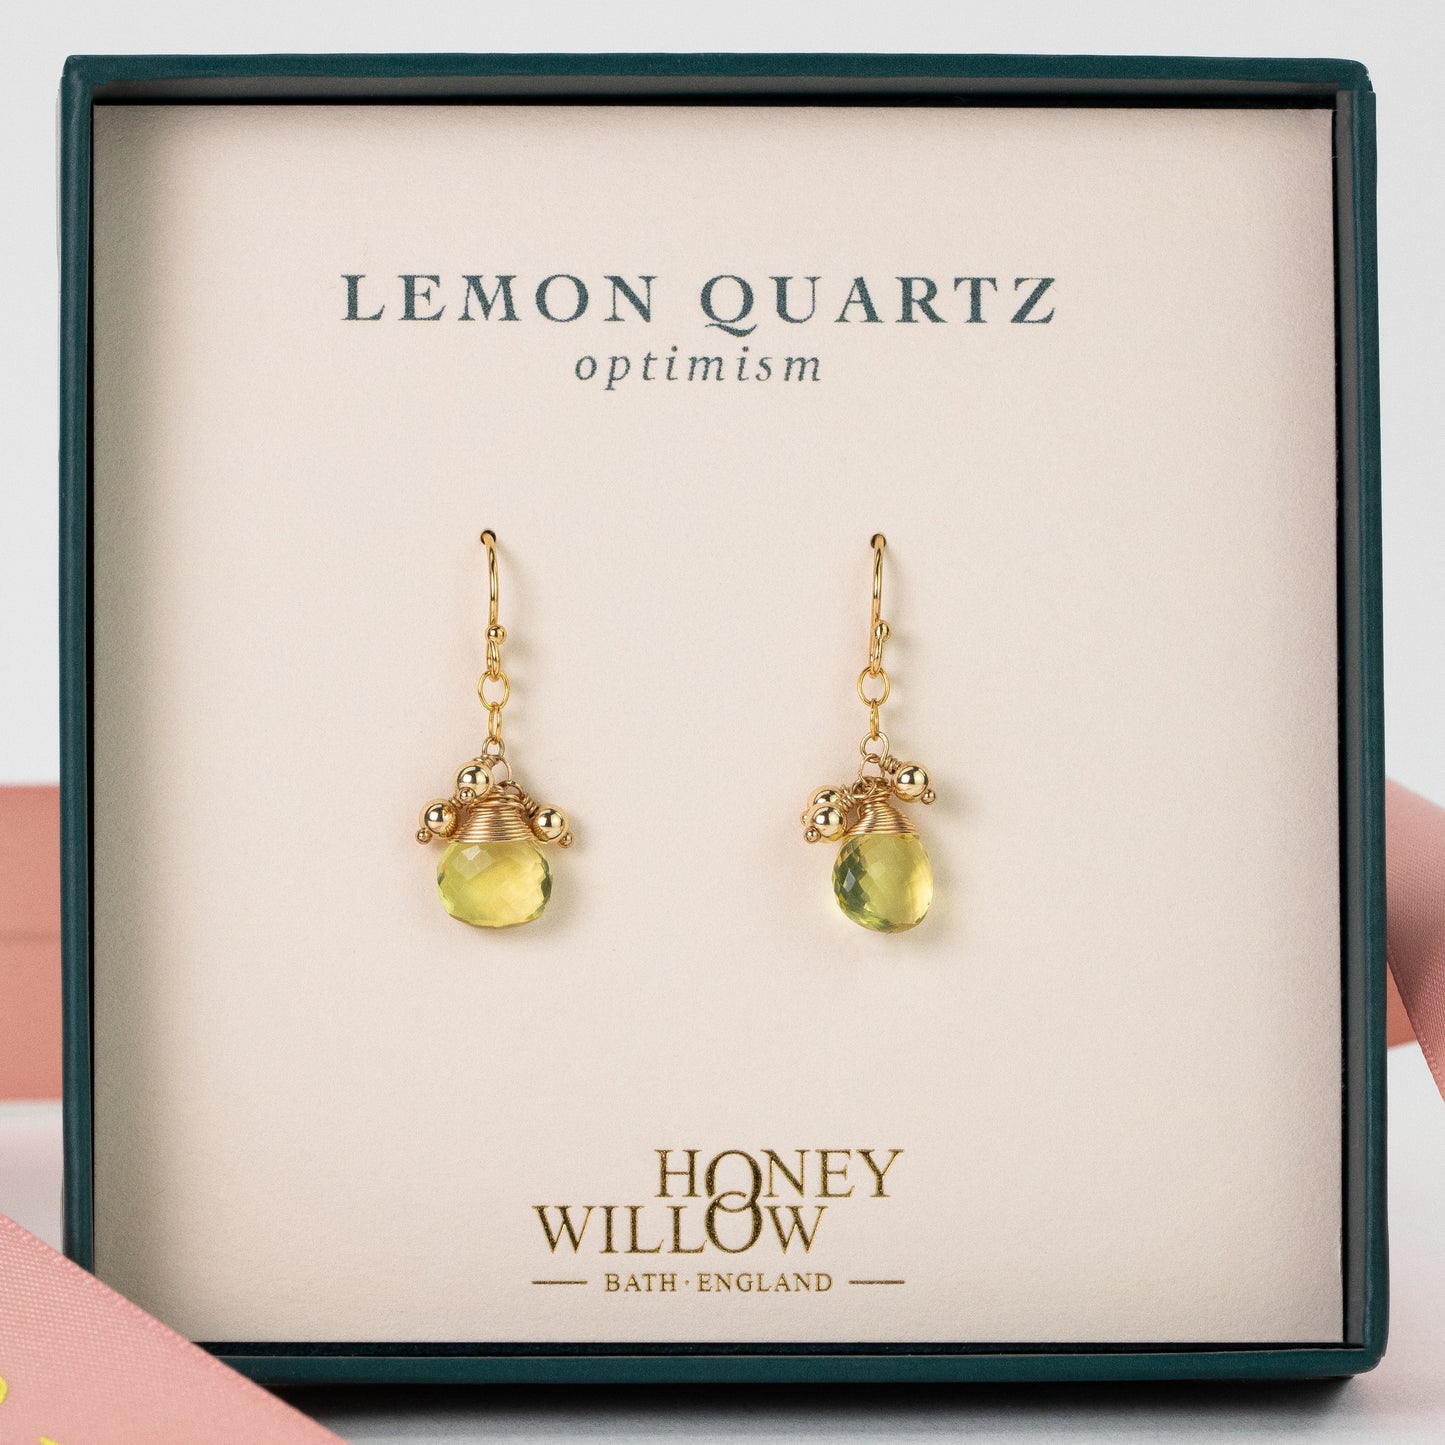 Lemon Quartz Earrings - Optimism